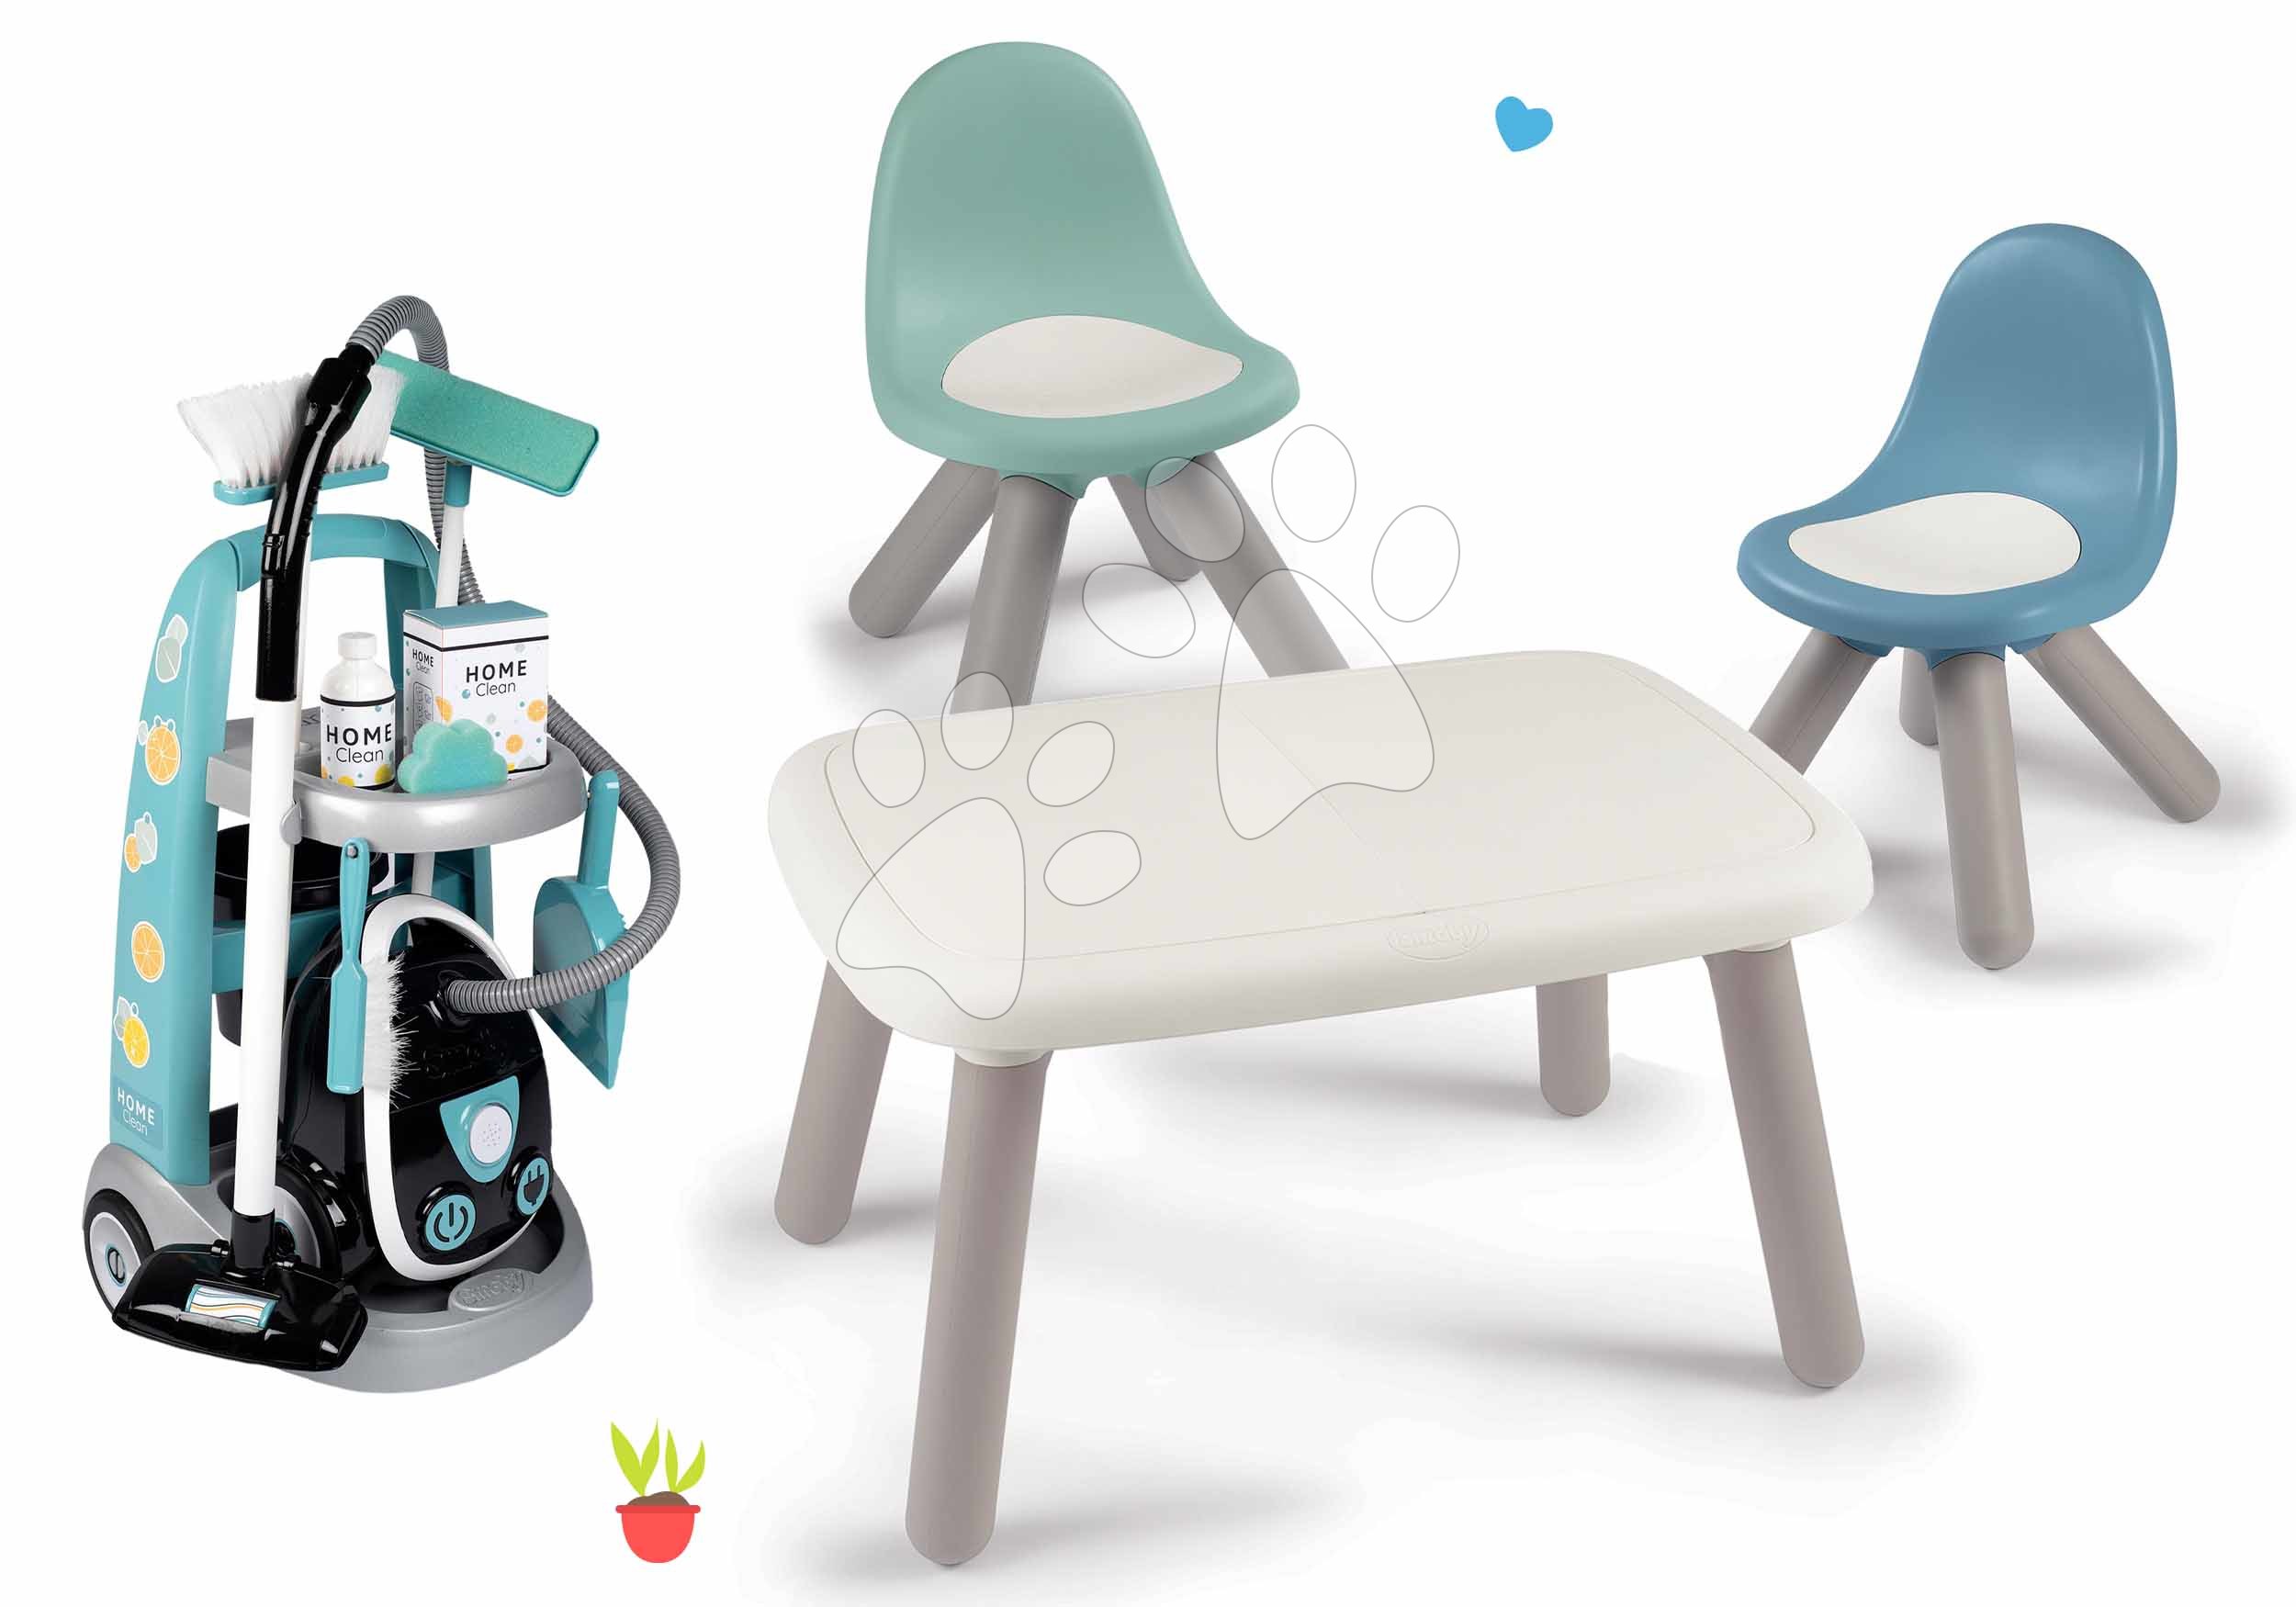 Hry na domácnosť - Set upratovací vozík s elektronickým vysávačom Cleaning Trolley Vacuum Cleaner Smoby a stôl KidTable s 2 stoličkami KidChair